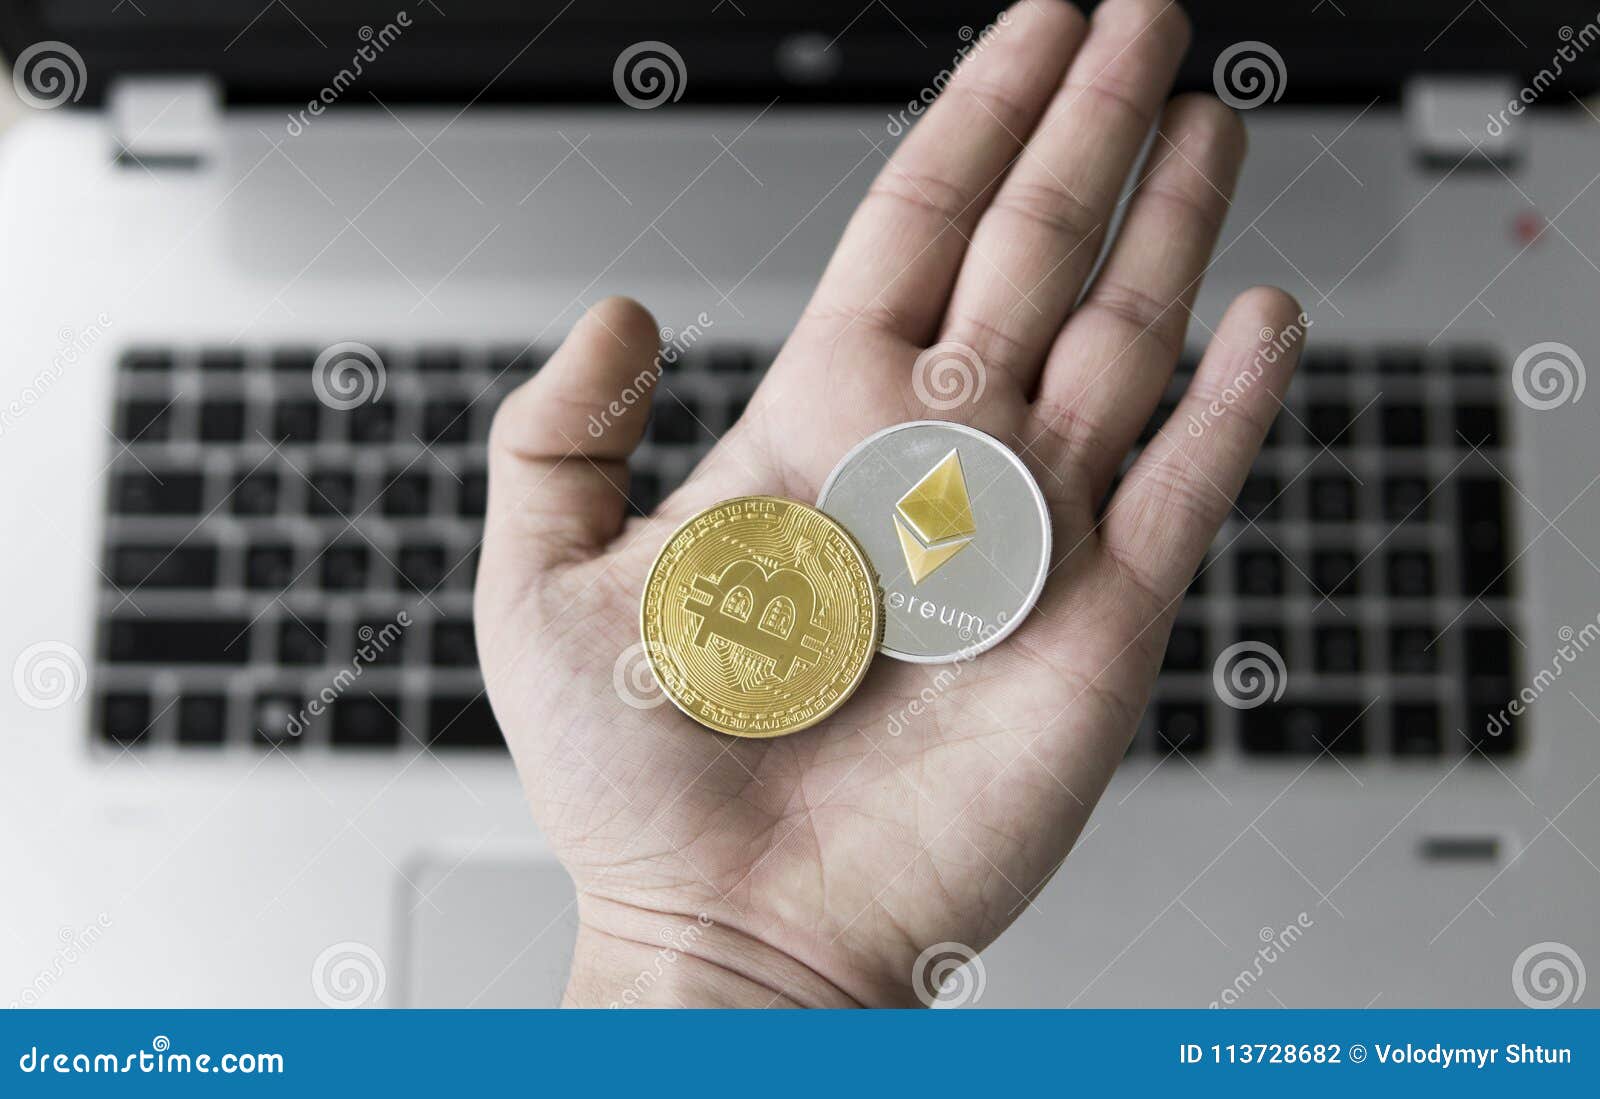 bitcoin comercial pentru ethereum